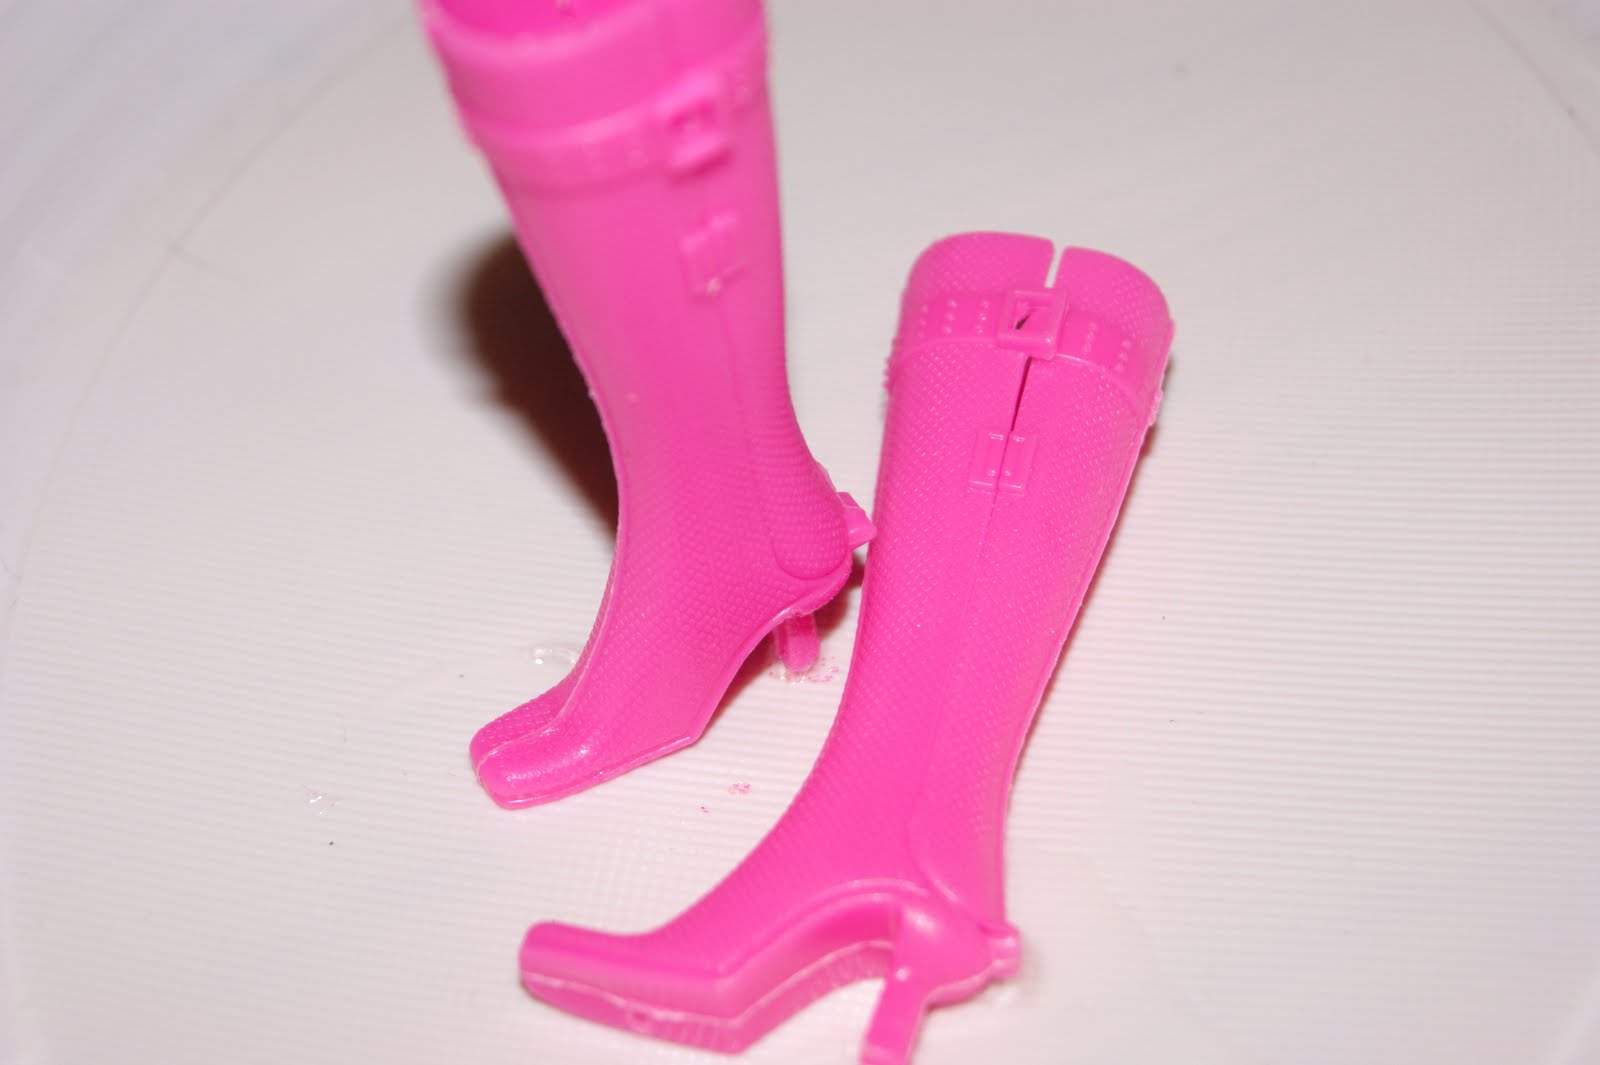 Пластилин для барби. Обувь для кукол Барби. Обувь для Барби 3д ручкой. Обувь для куклы Барби из воздушного пластилина. Обувь для куклы из воздушного пластилина.